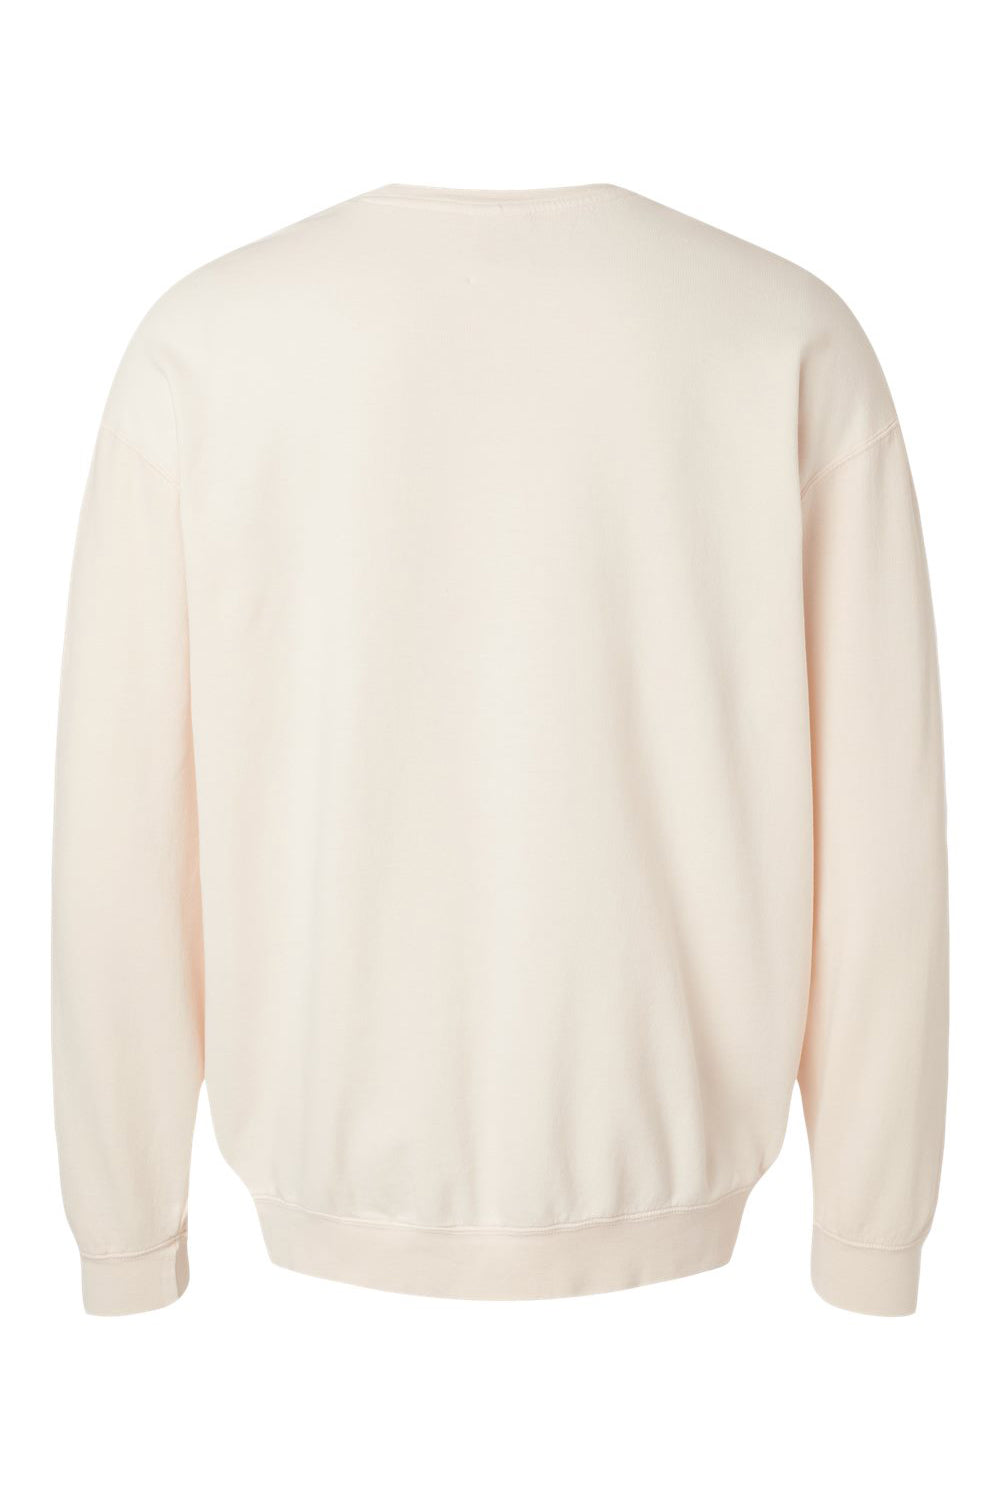 Comfort Colors 1466 Mens Garment Dyed Fleece Crewneck Sweatshirt Ivory Flat Back